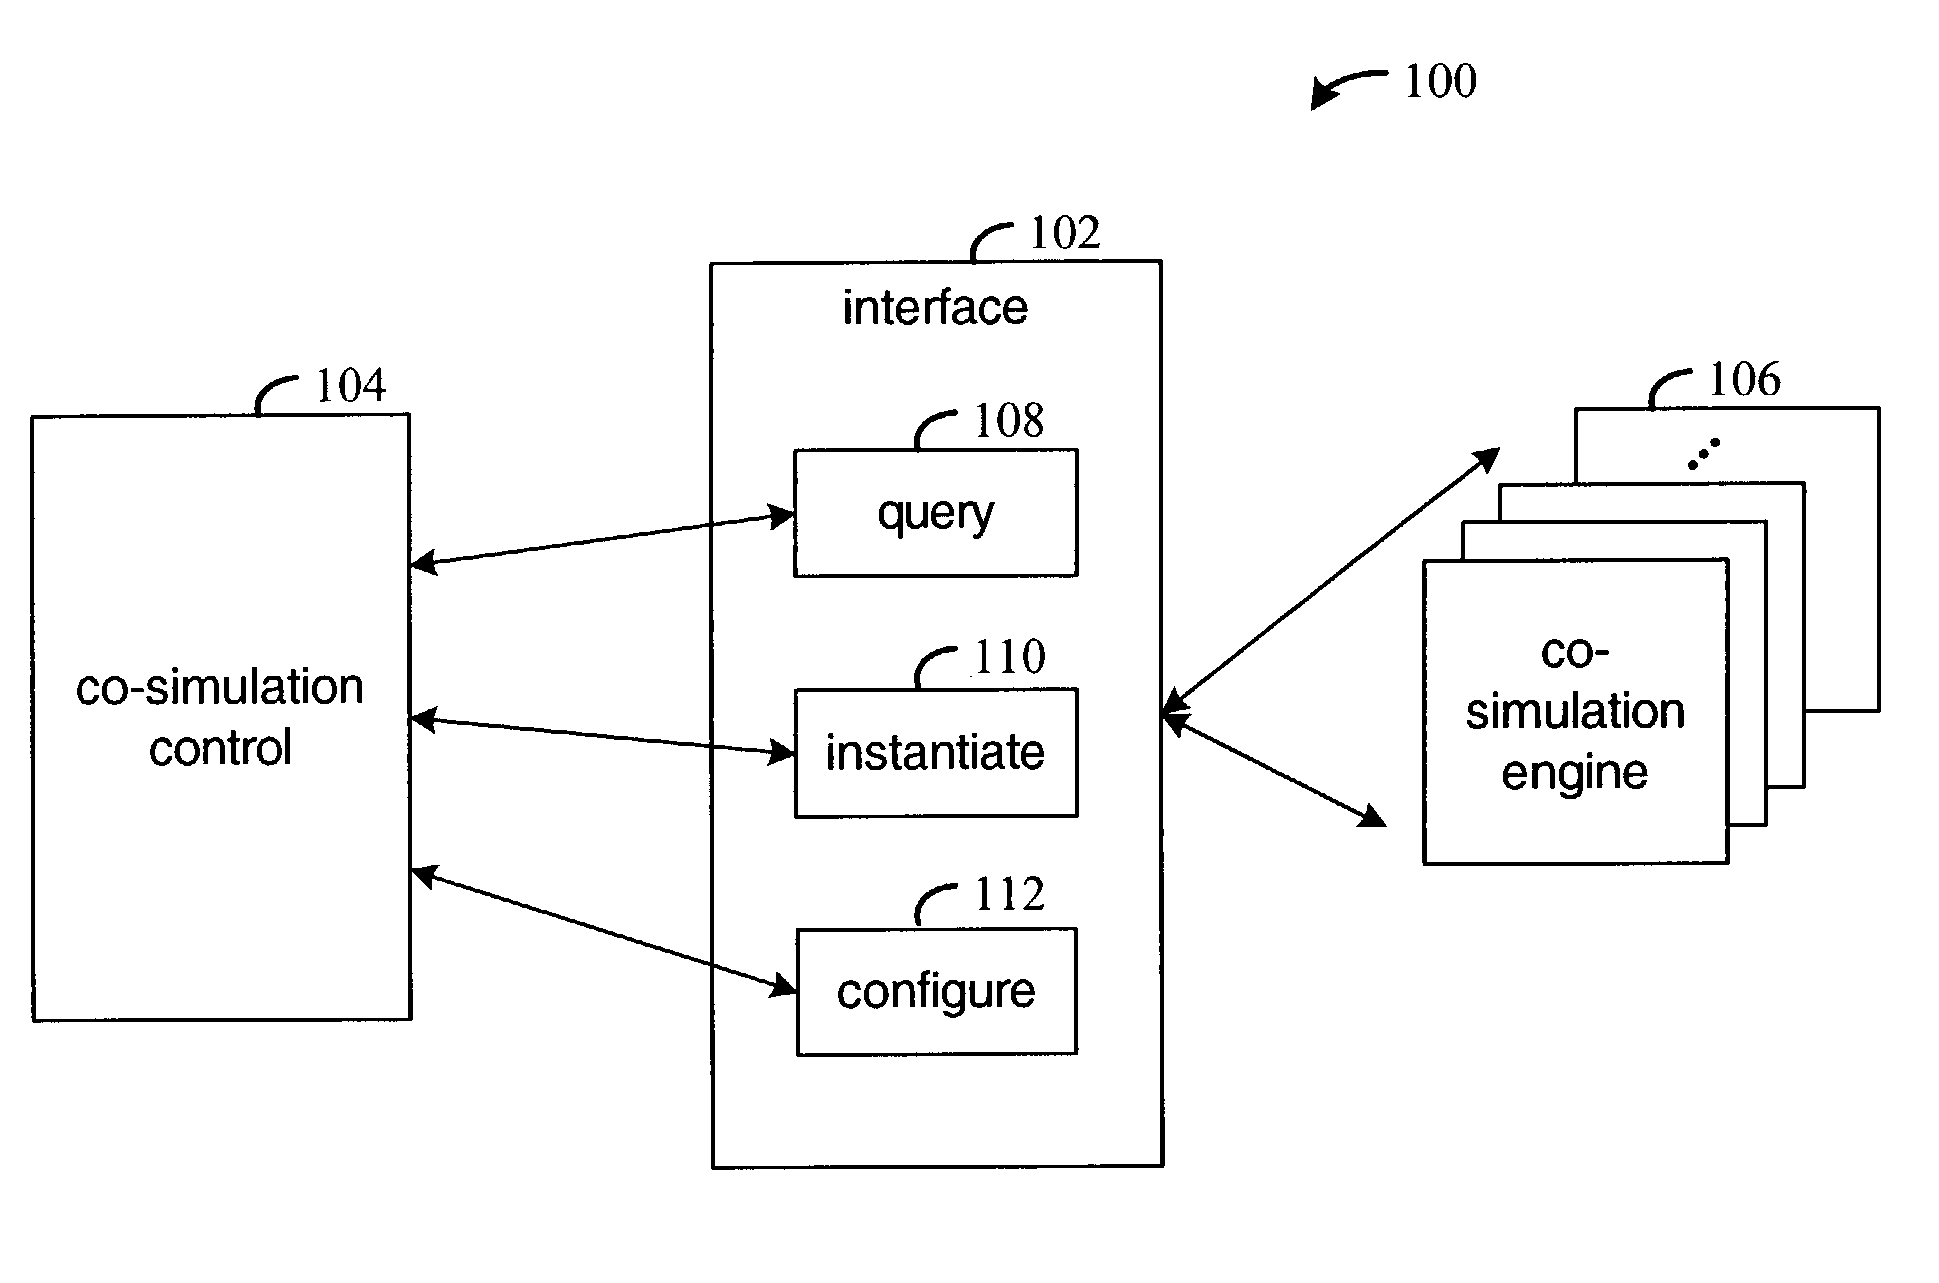 Co-simulation interface